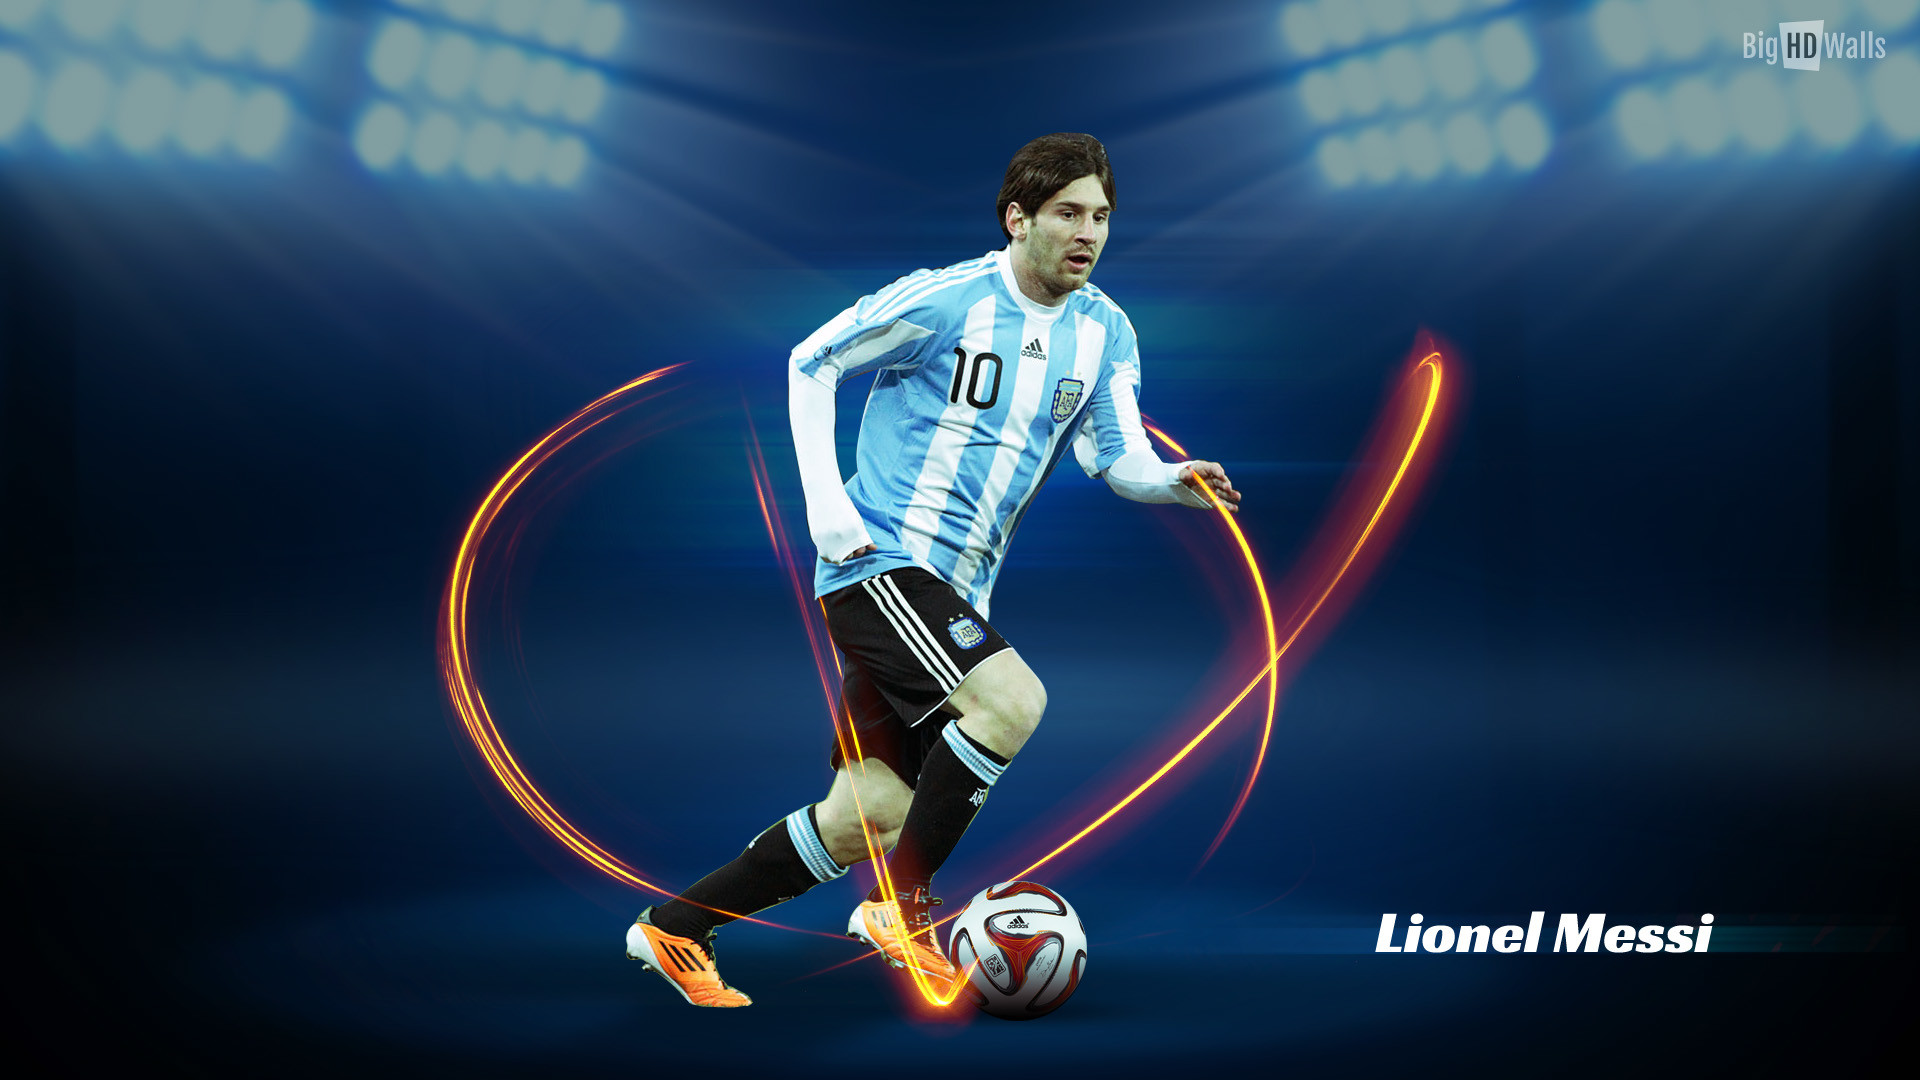 Lionel Messi Argentina FIFA World Cup 2014 wallpapers Messi Argentina HD 2015 Wallpaper